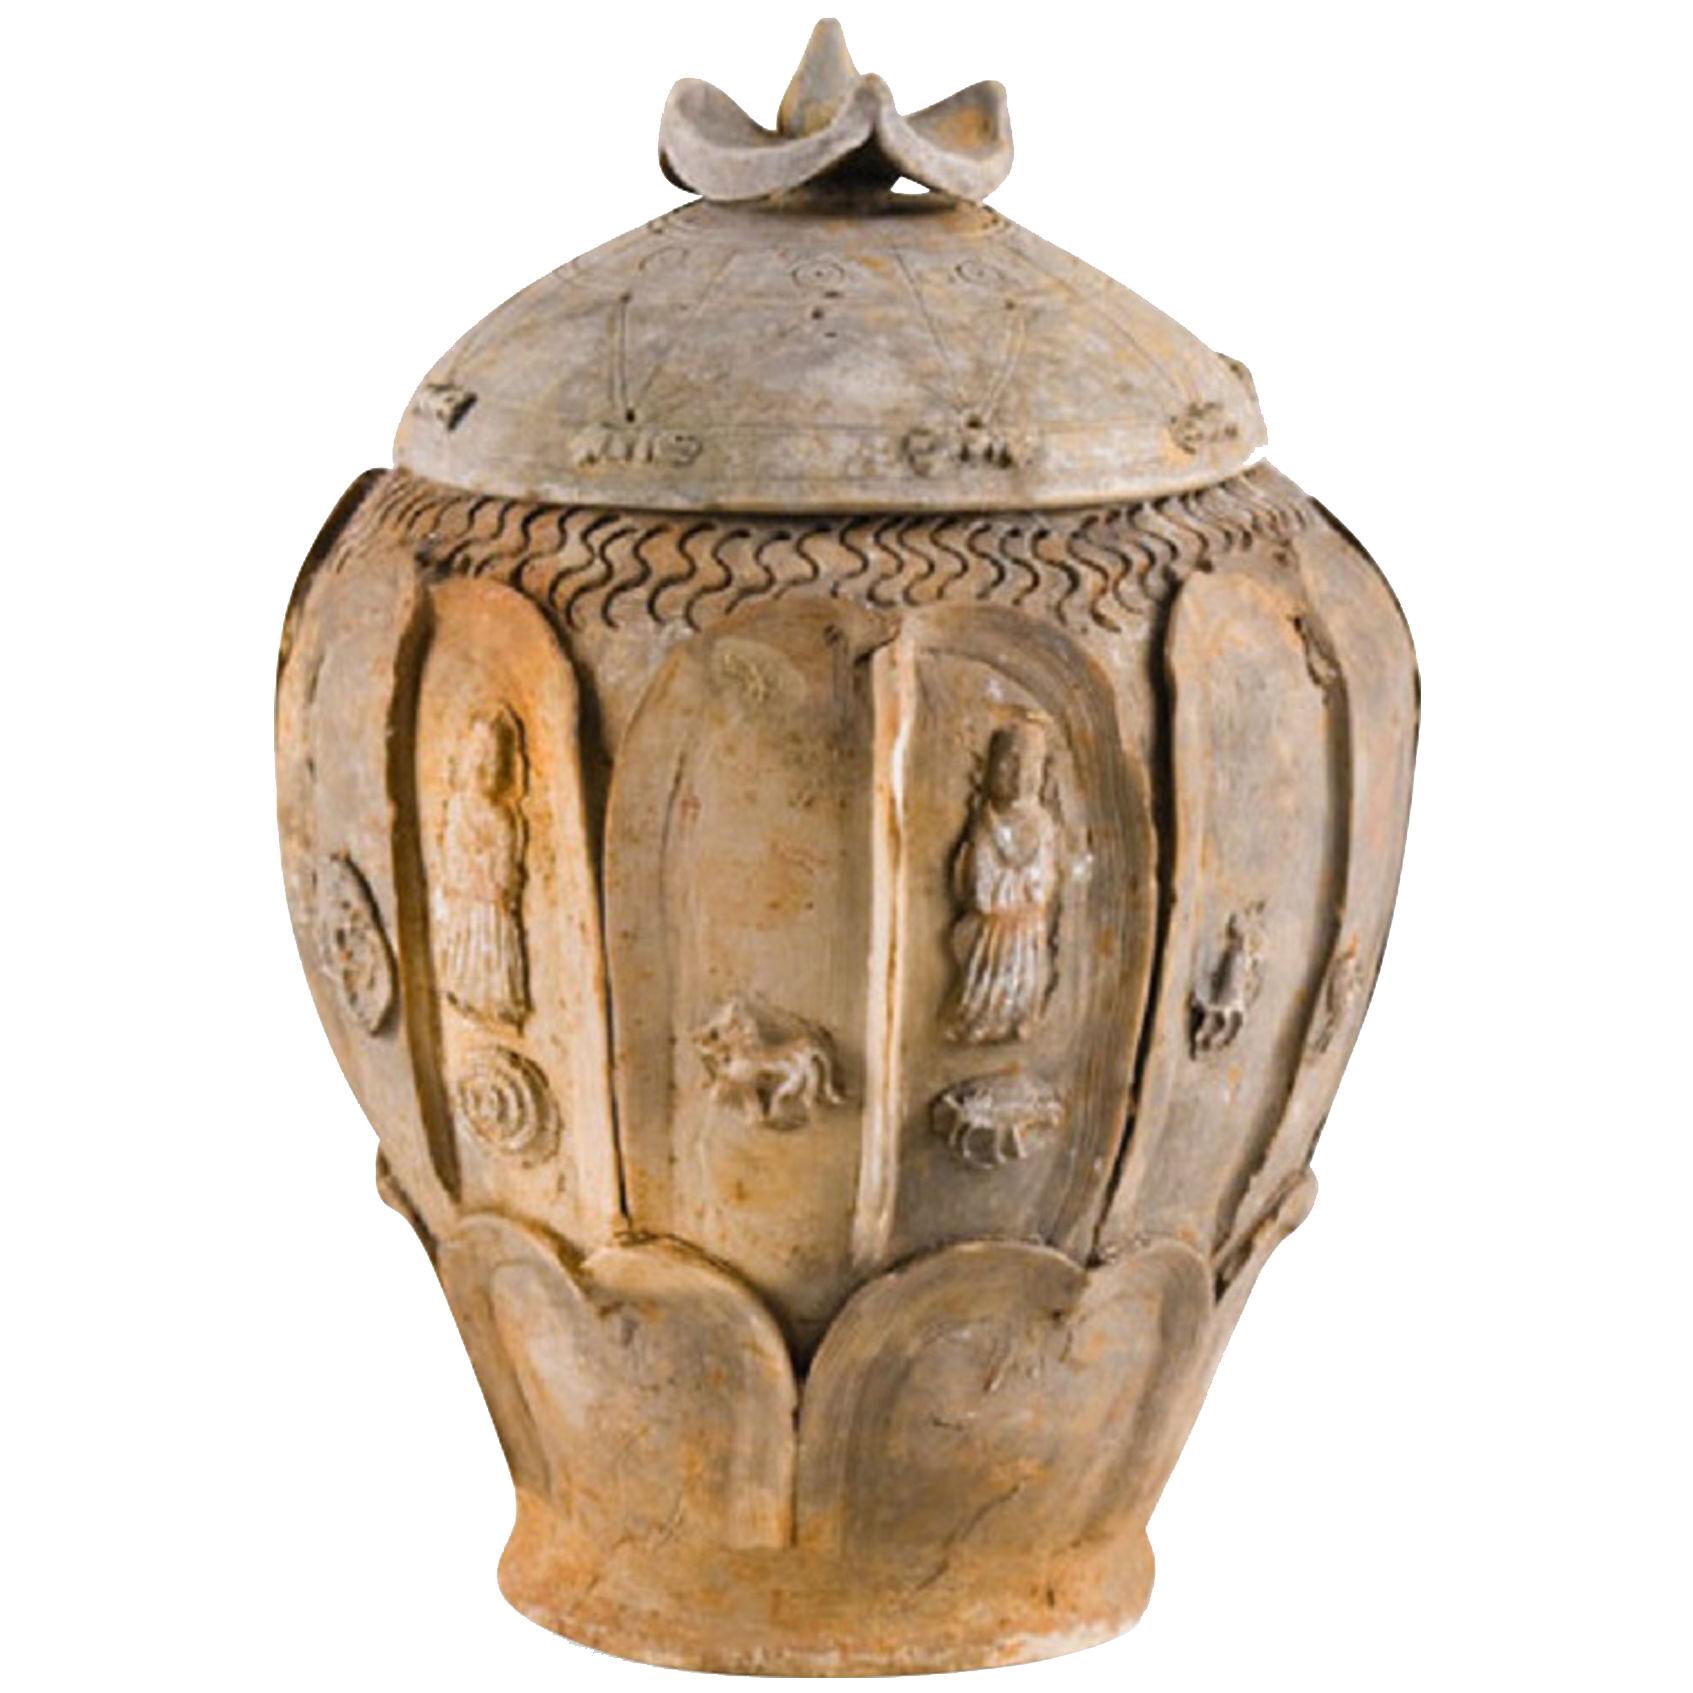 Unusual Buddhist Offering Jar